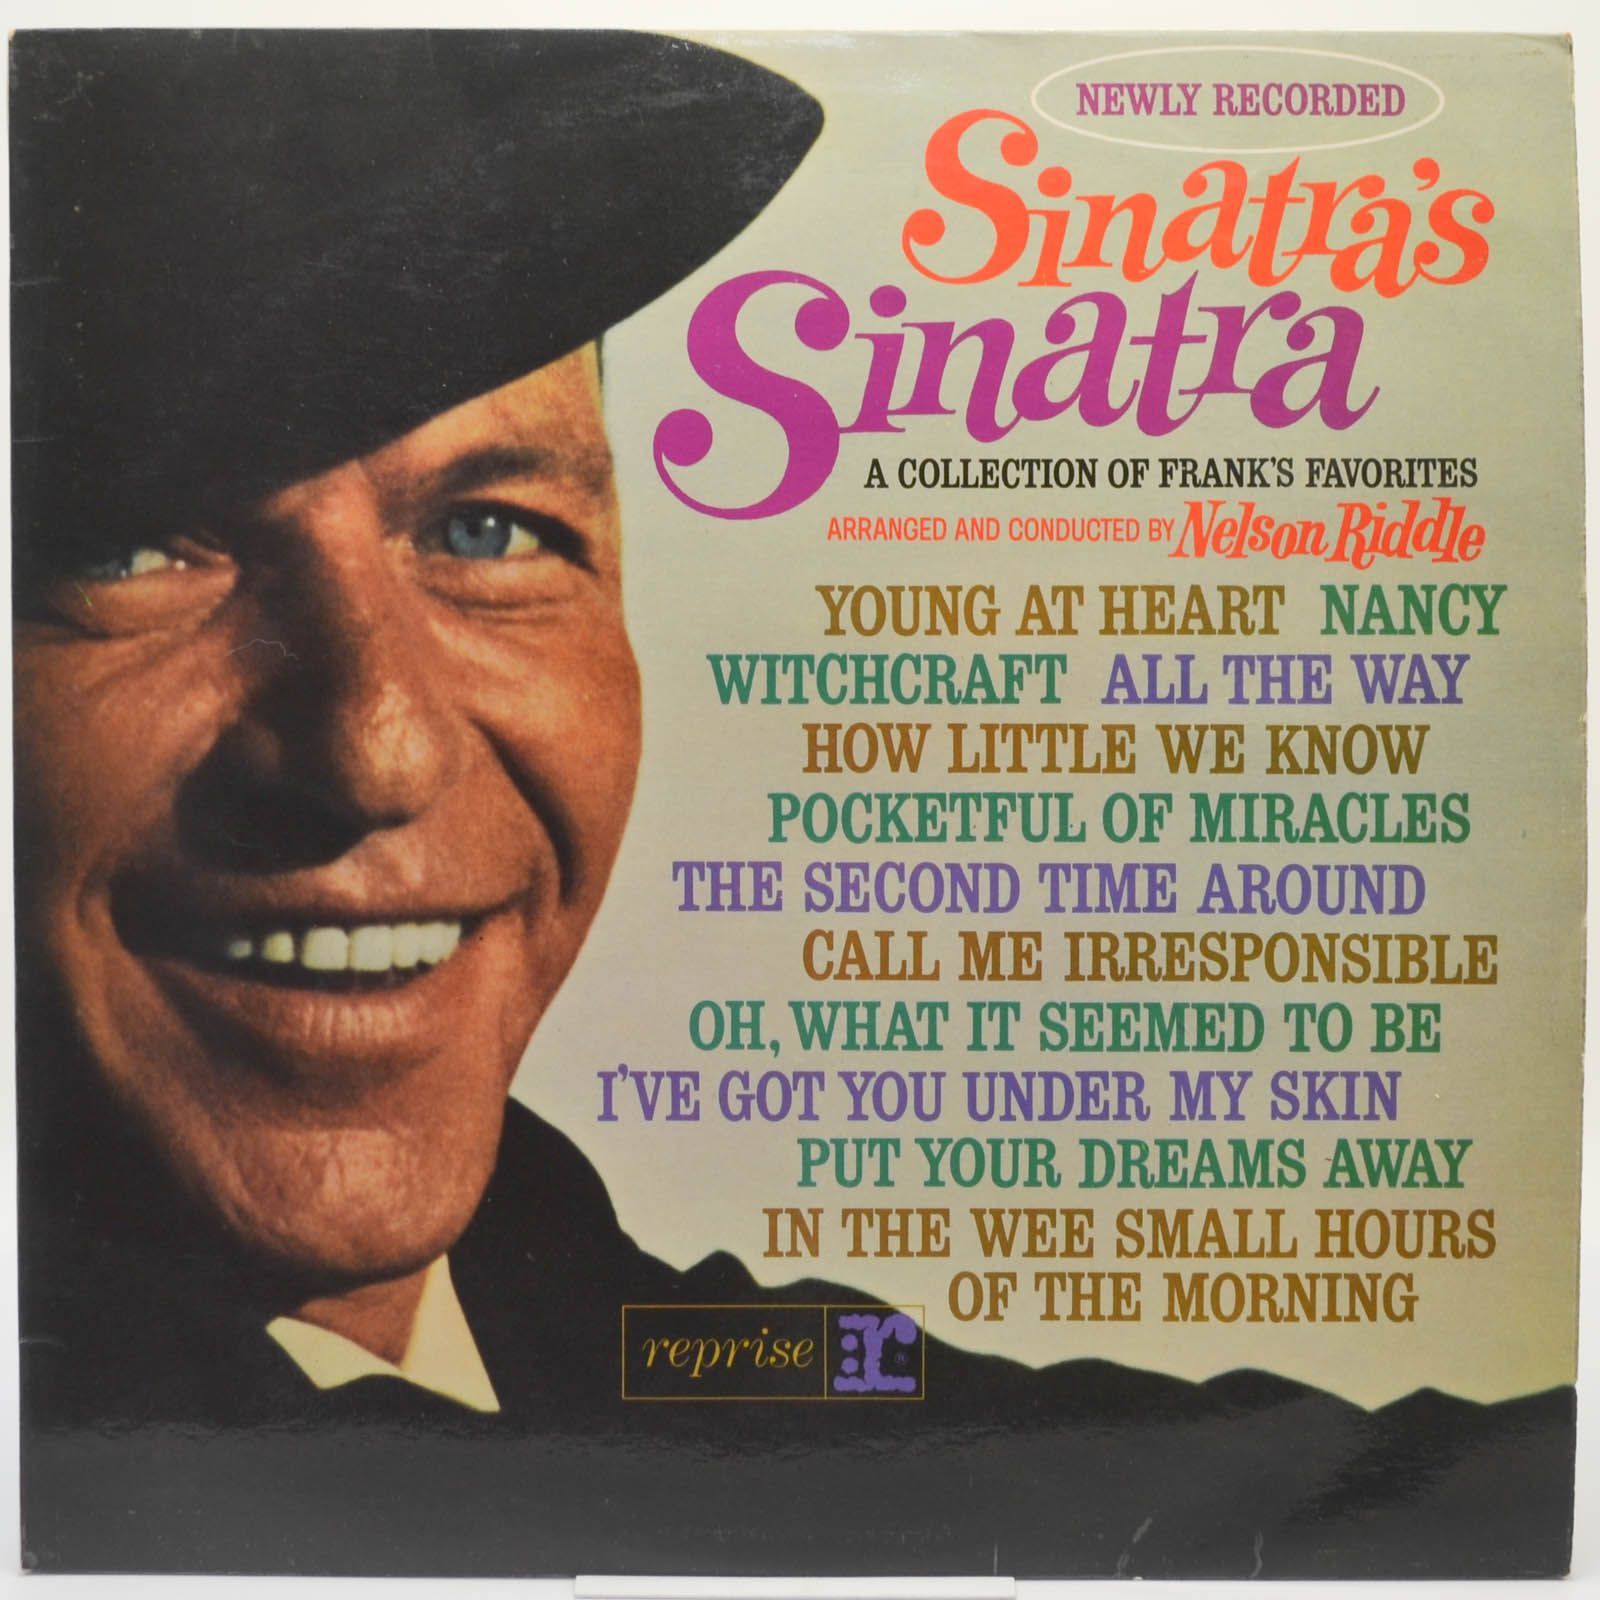 Frank Sinatra — Sinatra's Sinatra (UK), 1963